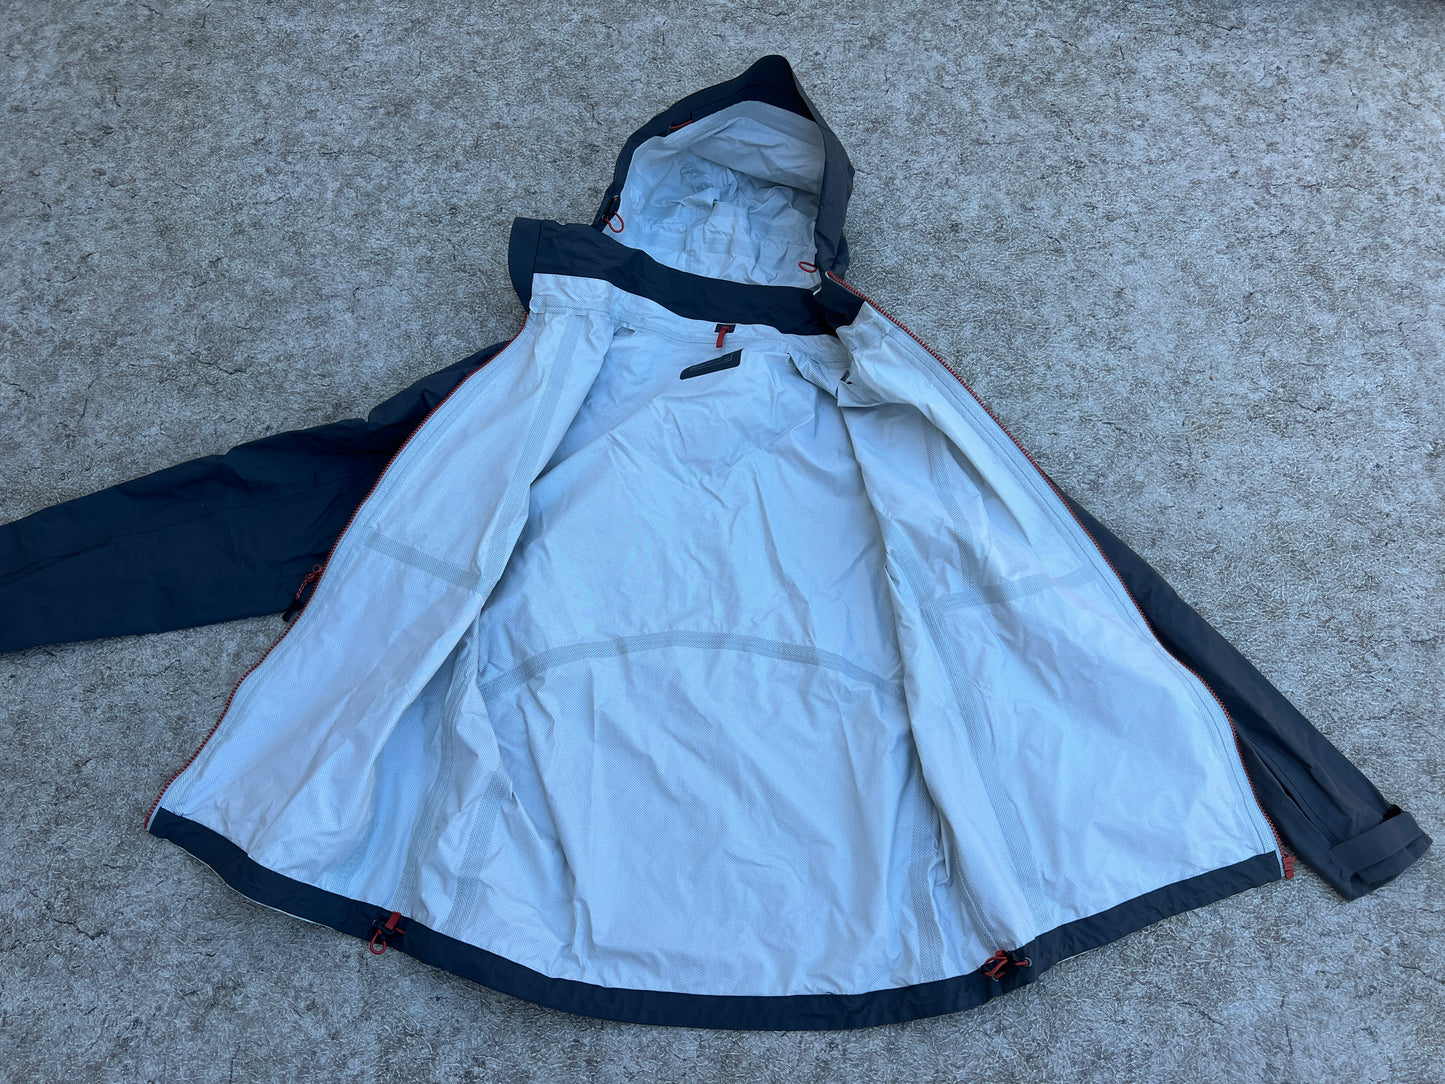 Rain Coat Men's Size Large Mondetta All Zipper Sealed Waterproof Vents Under Arms Grey White Like New